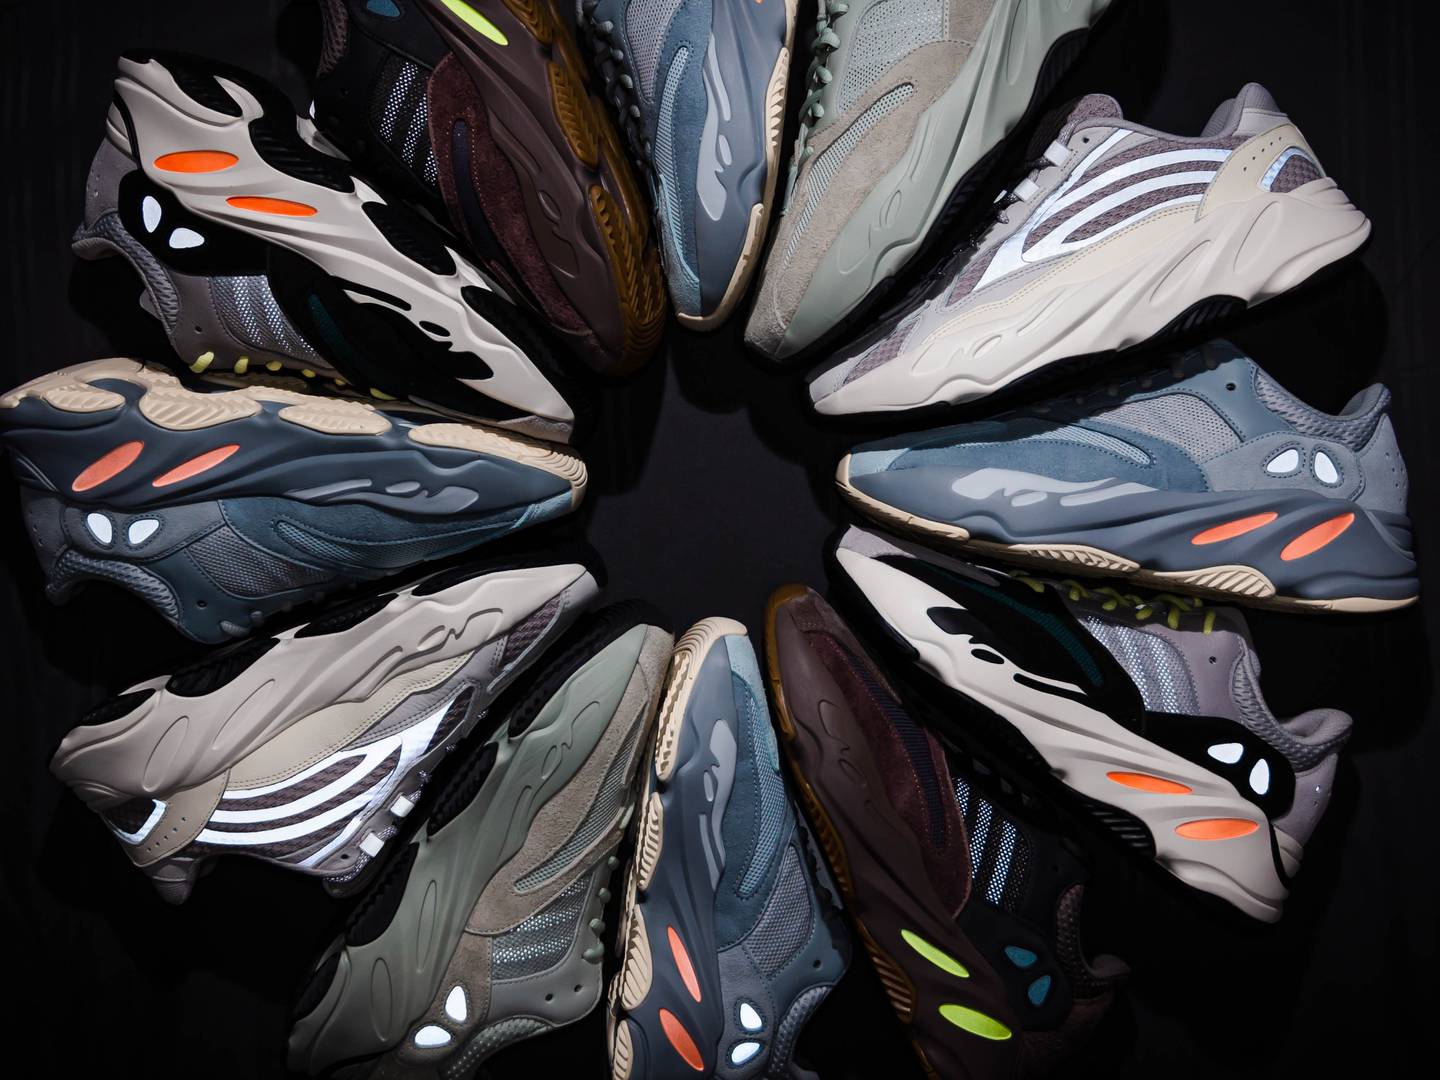 Yeezy sneaker collection. Shutterstock.